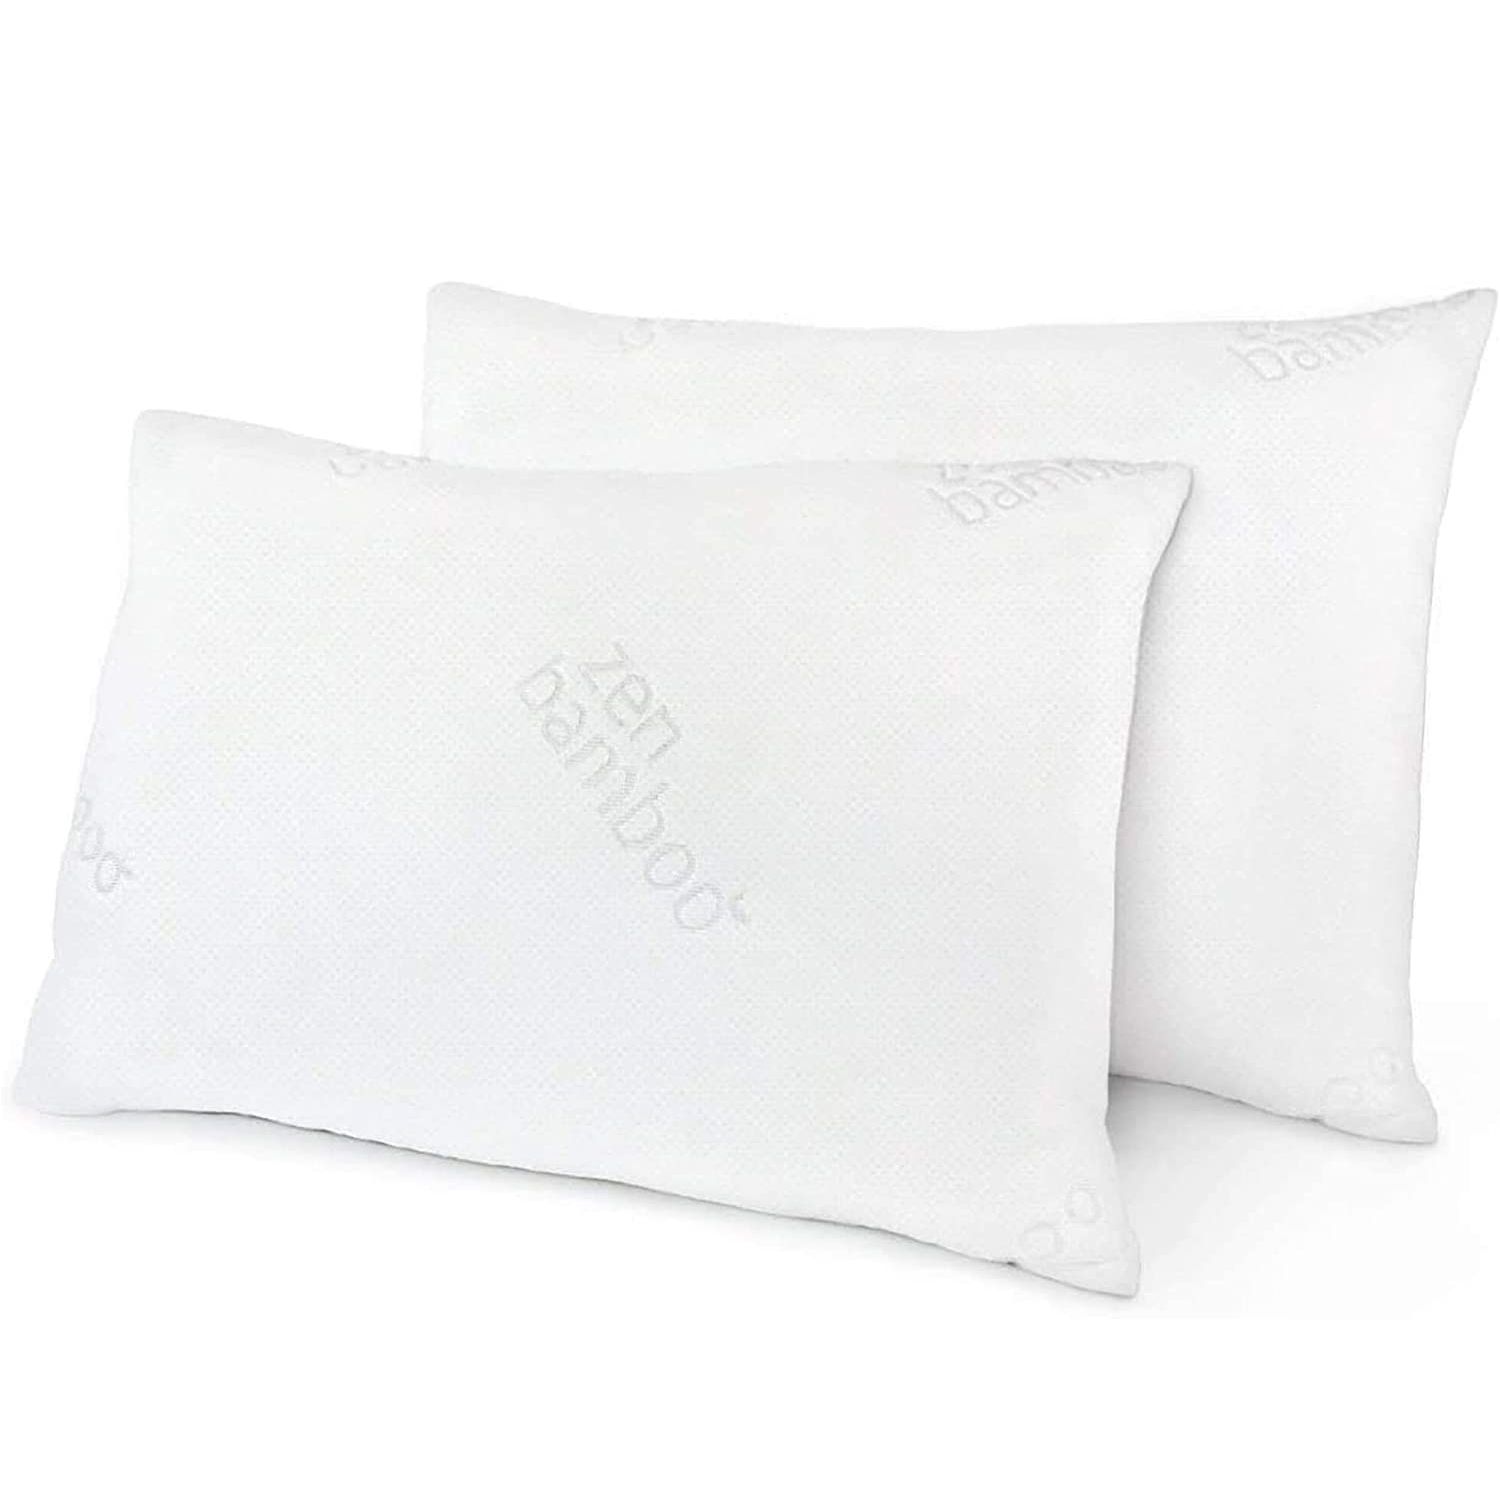 Zen Bamboo Pillows for Sleeping